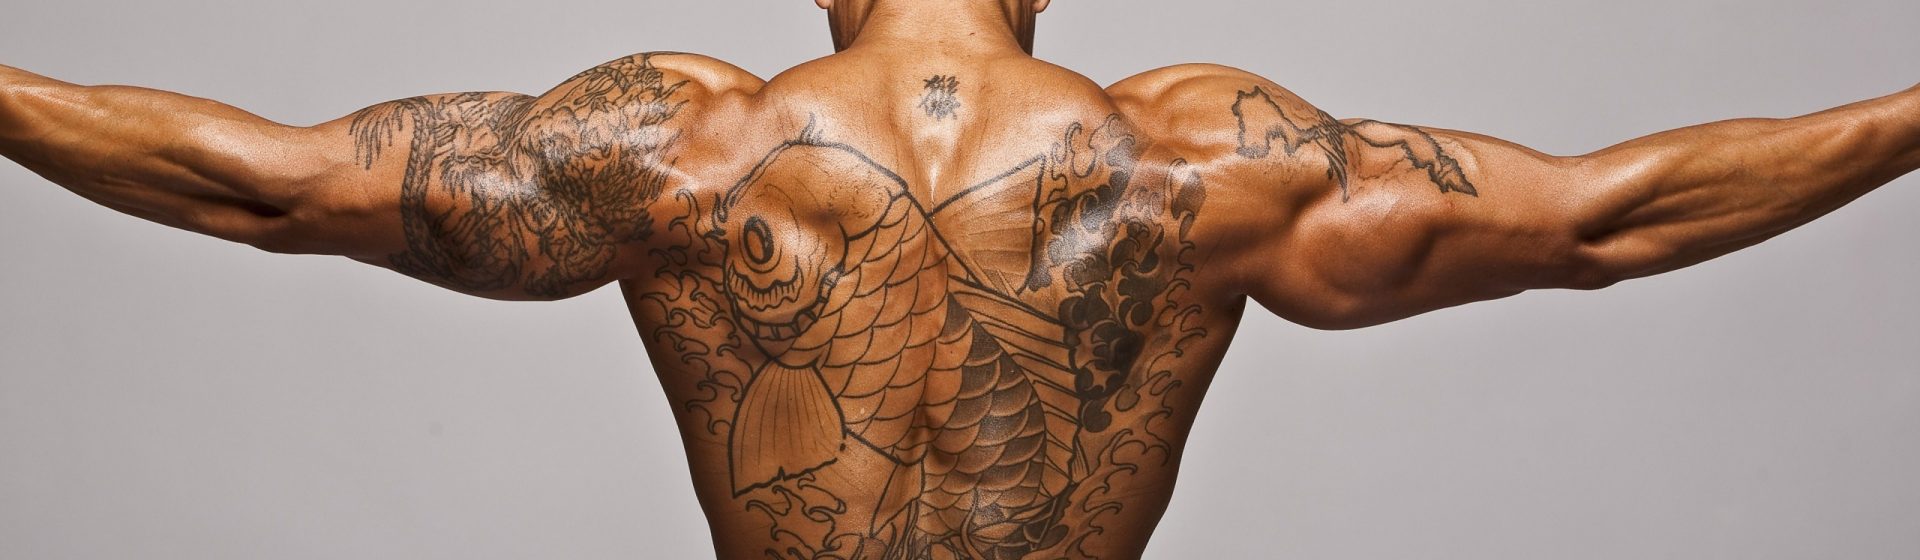 Service de tatoueur à Clichy – Rak Tattoo